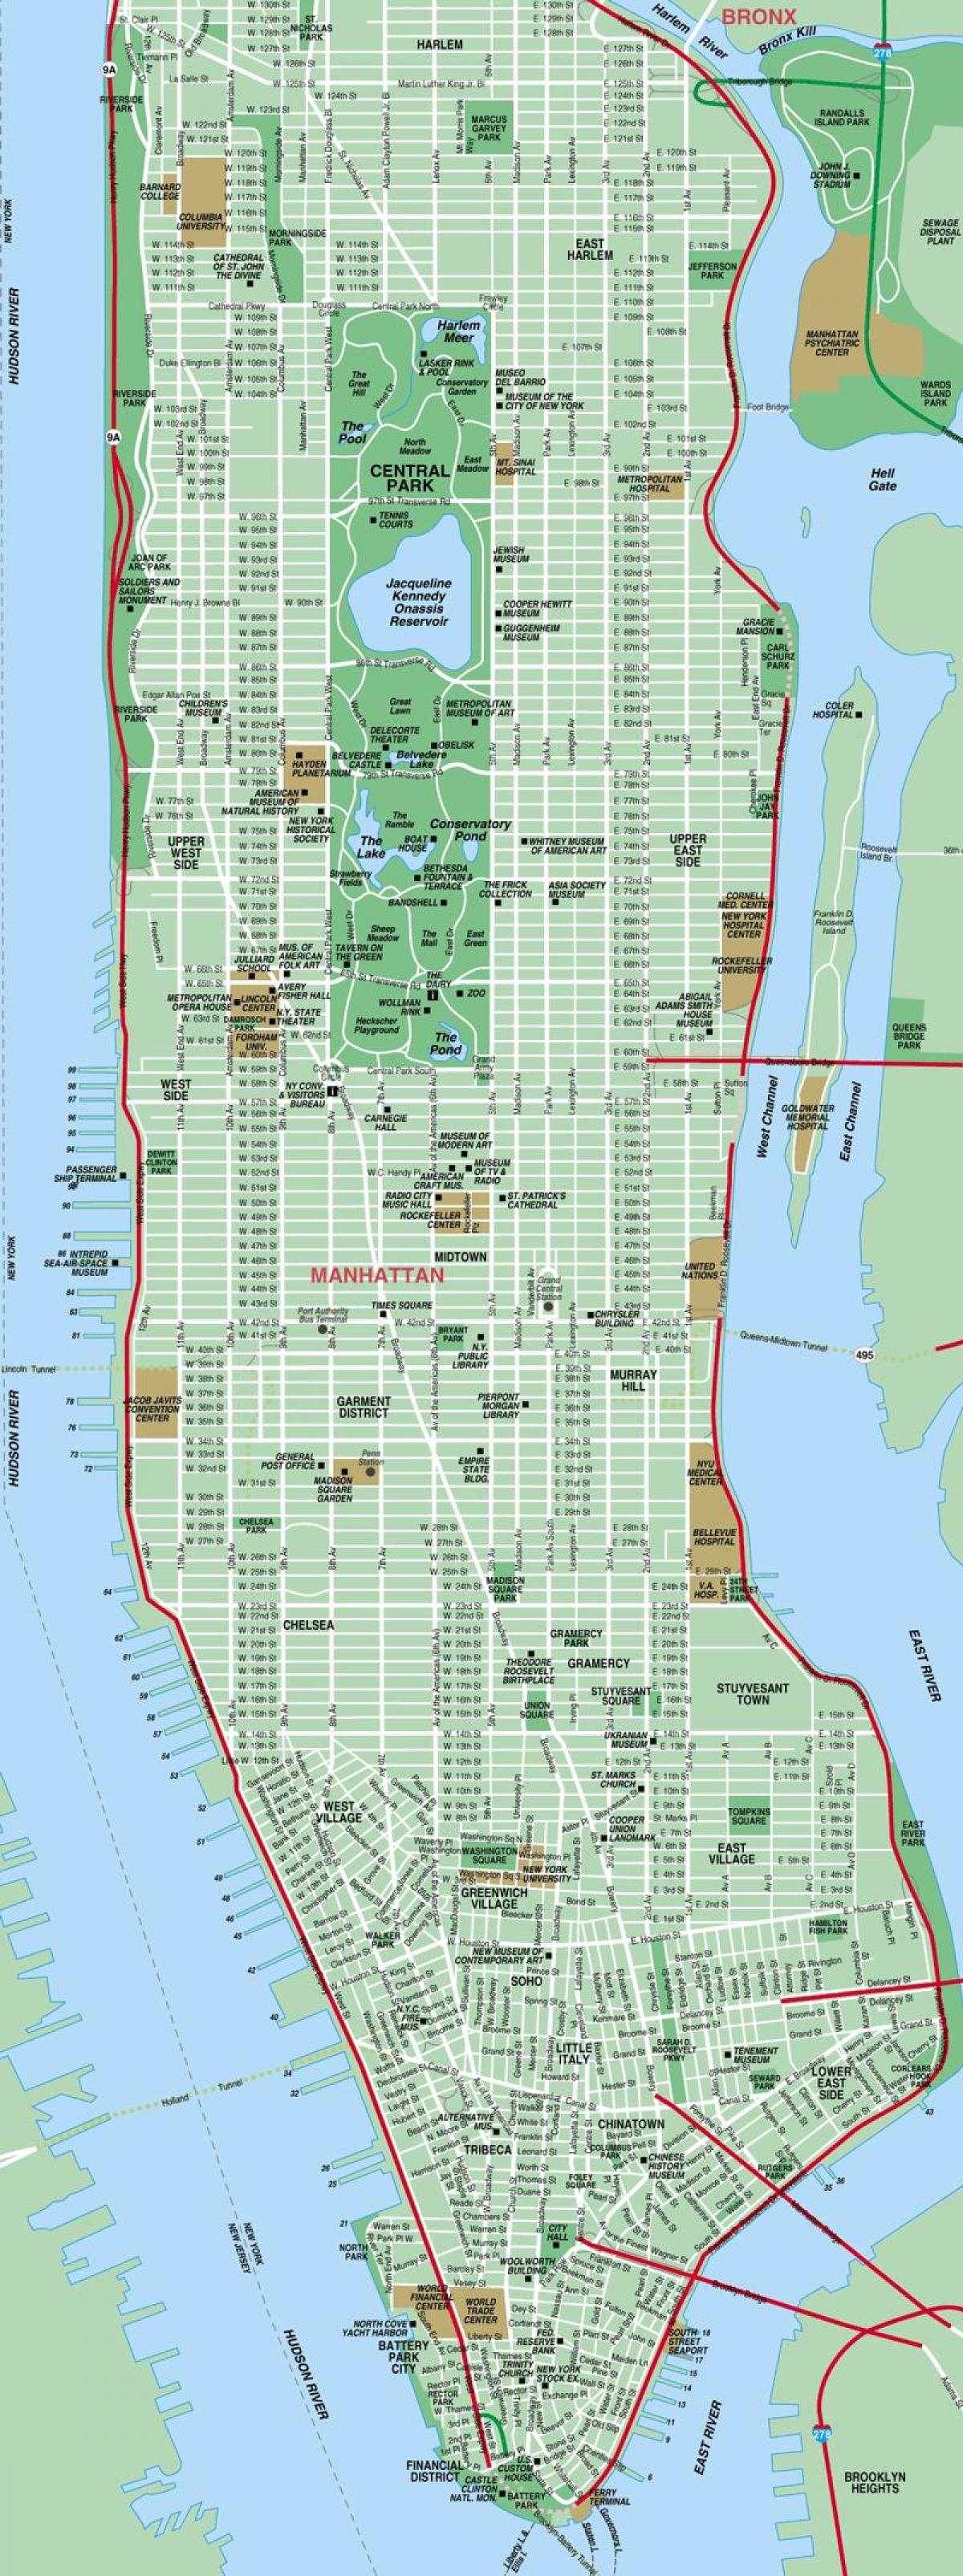 NYC street map Manhattan - Street kartta Manhattan new york (New York - USA)